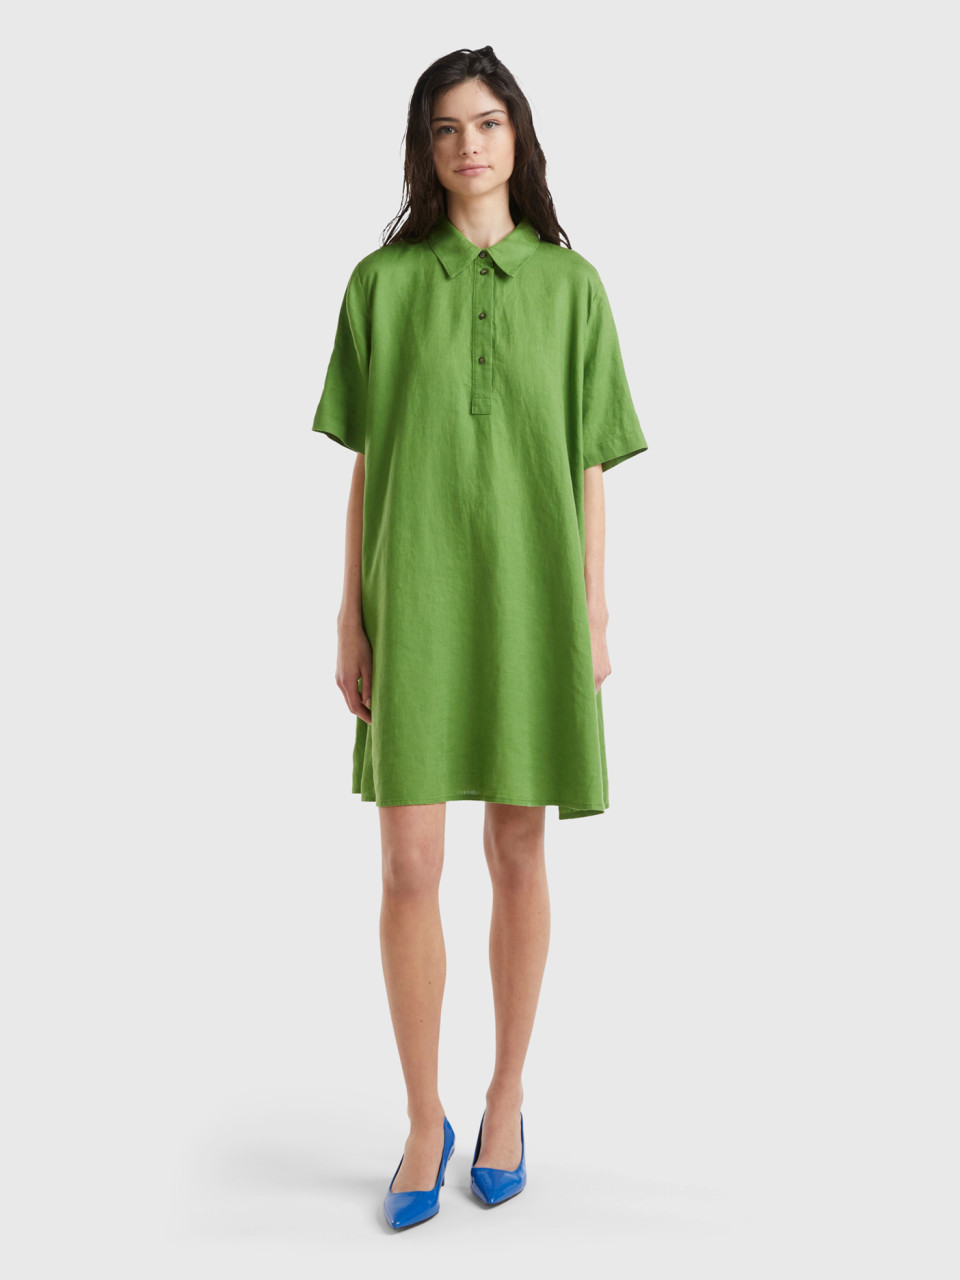 Benetton, Cropped Dress In Pure Linen, Military Green, Women